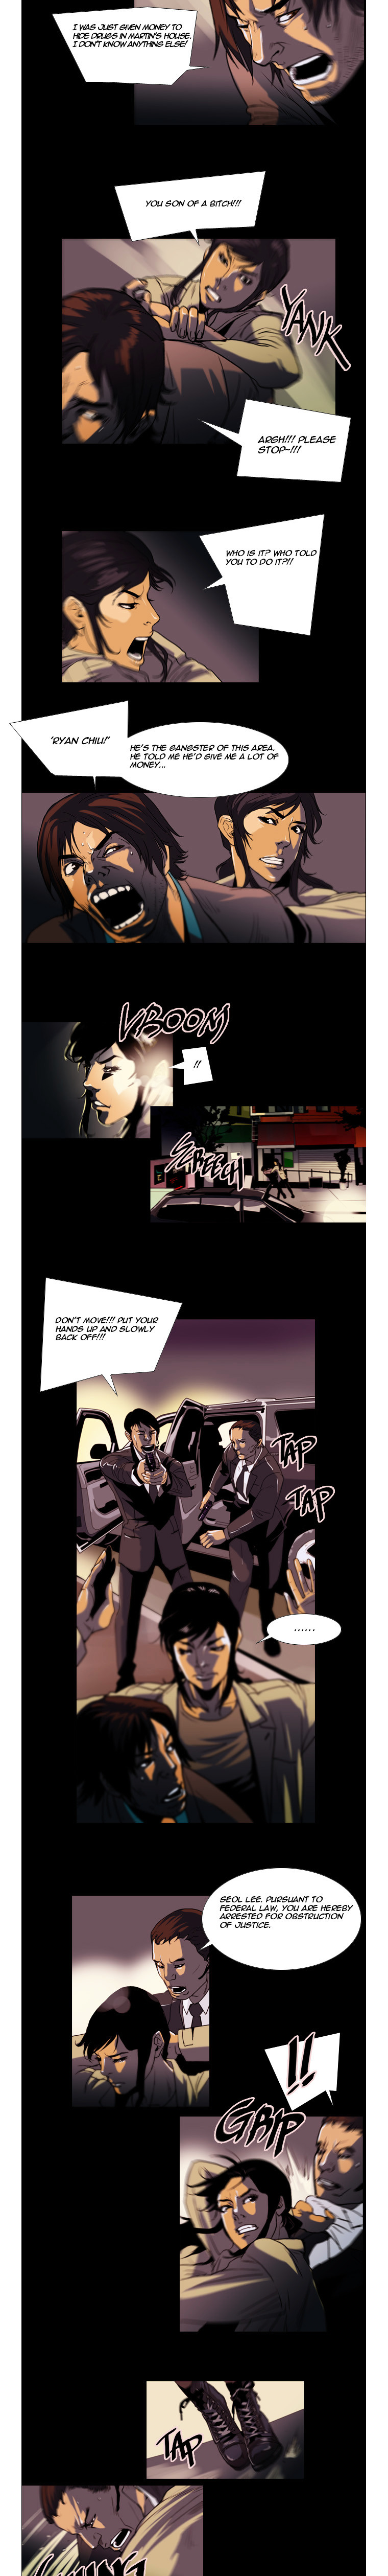 Seol Lee - Page 2